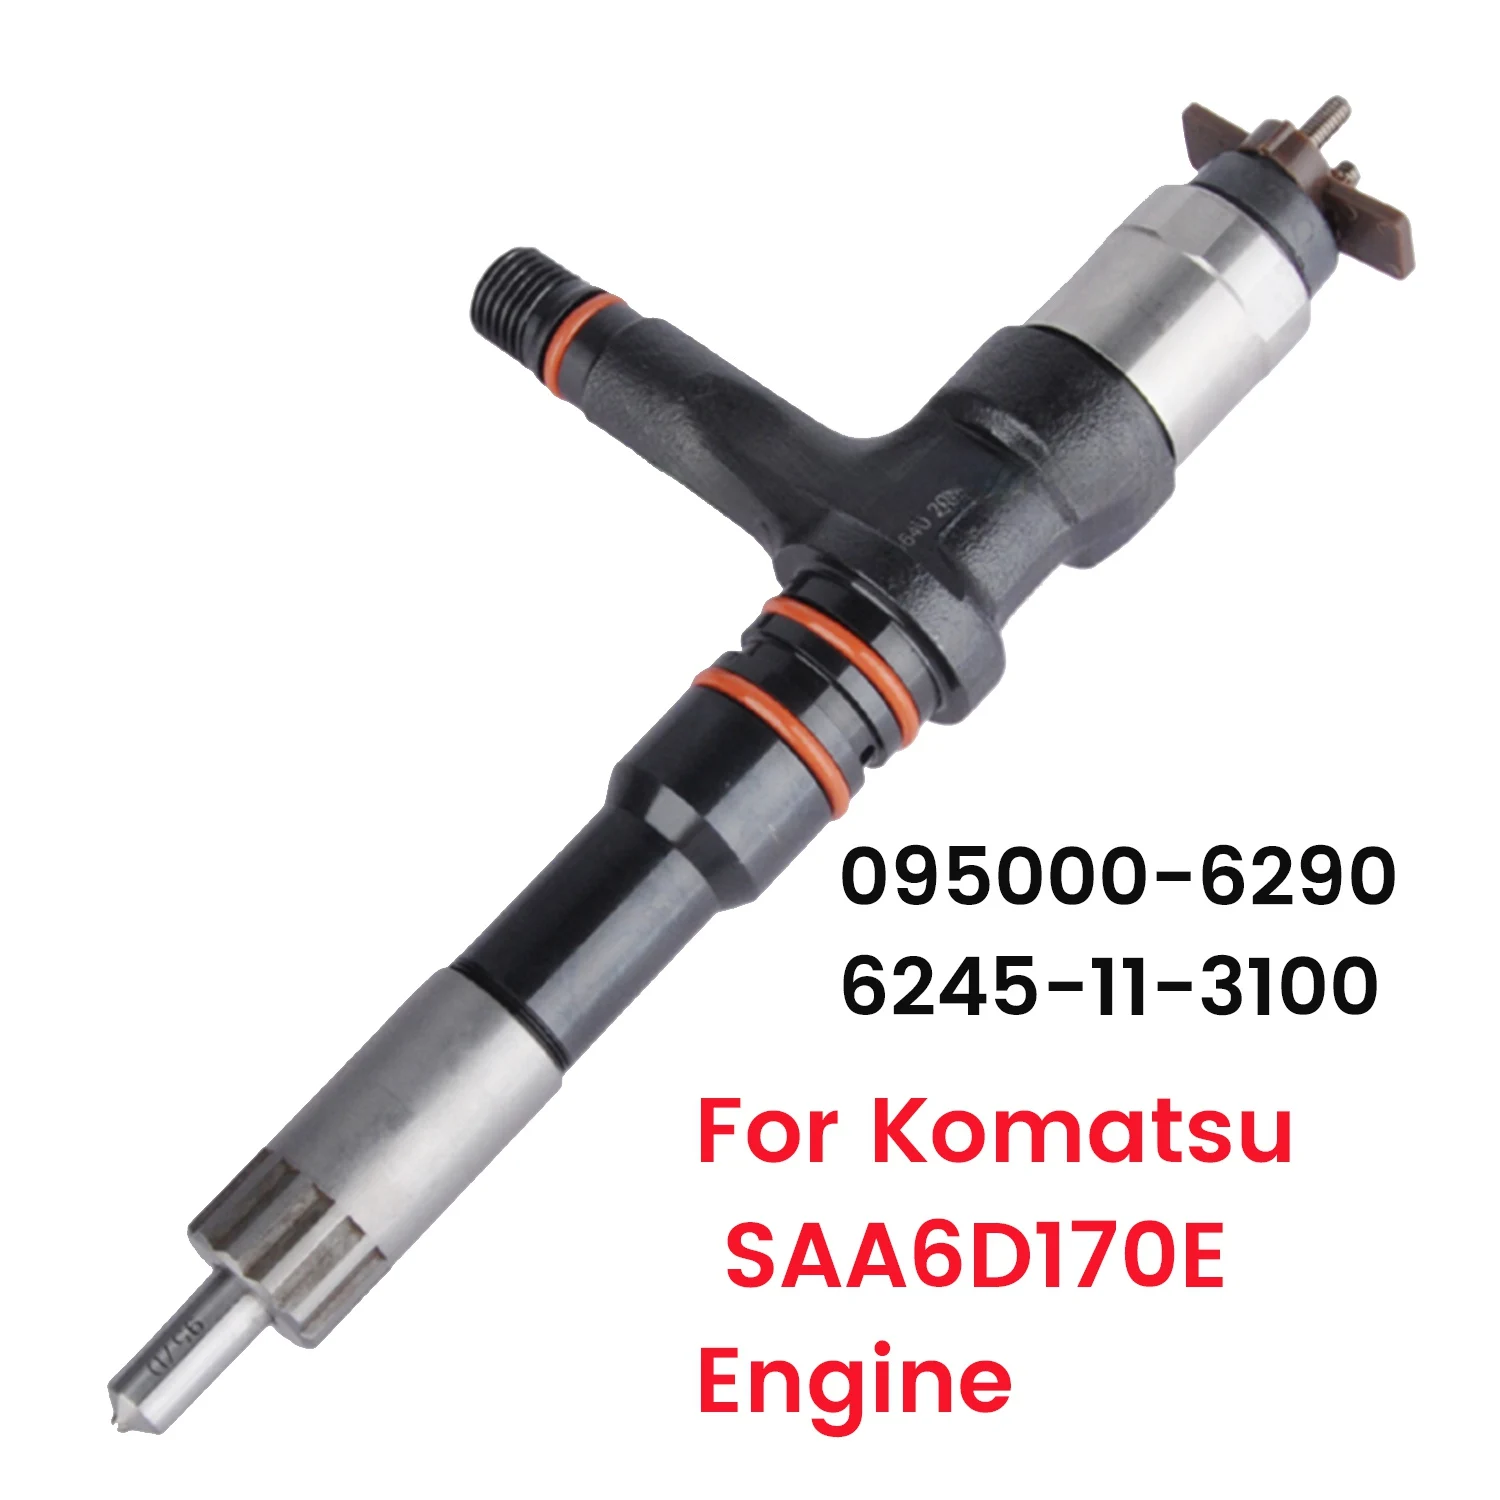 

New Diesel Common Rail Injector 095000-6290 / 6245-11-3100 for Komatsu SAA6D170E Engine